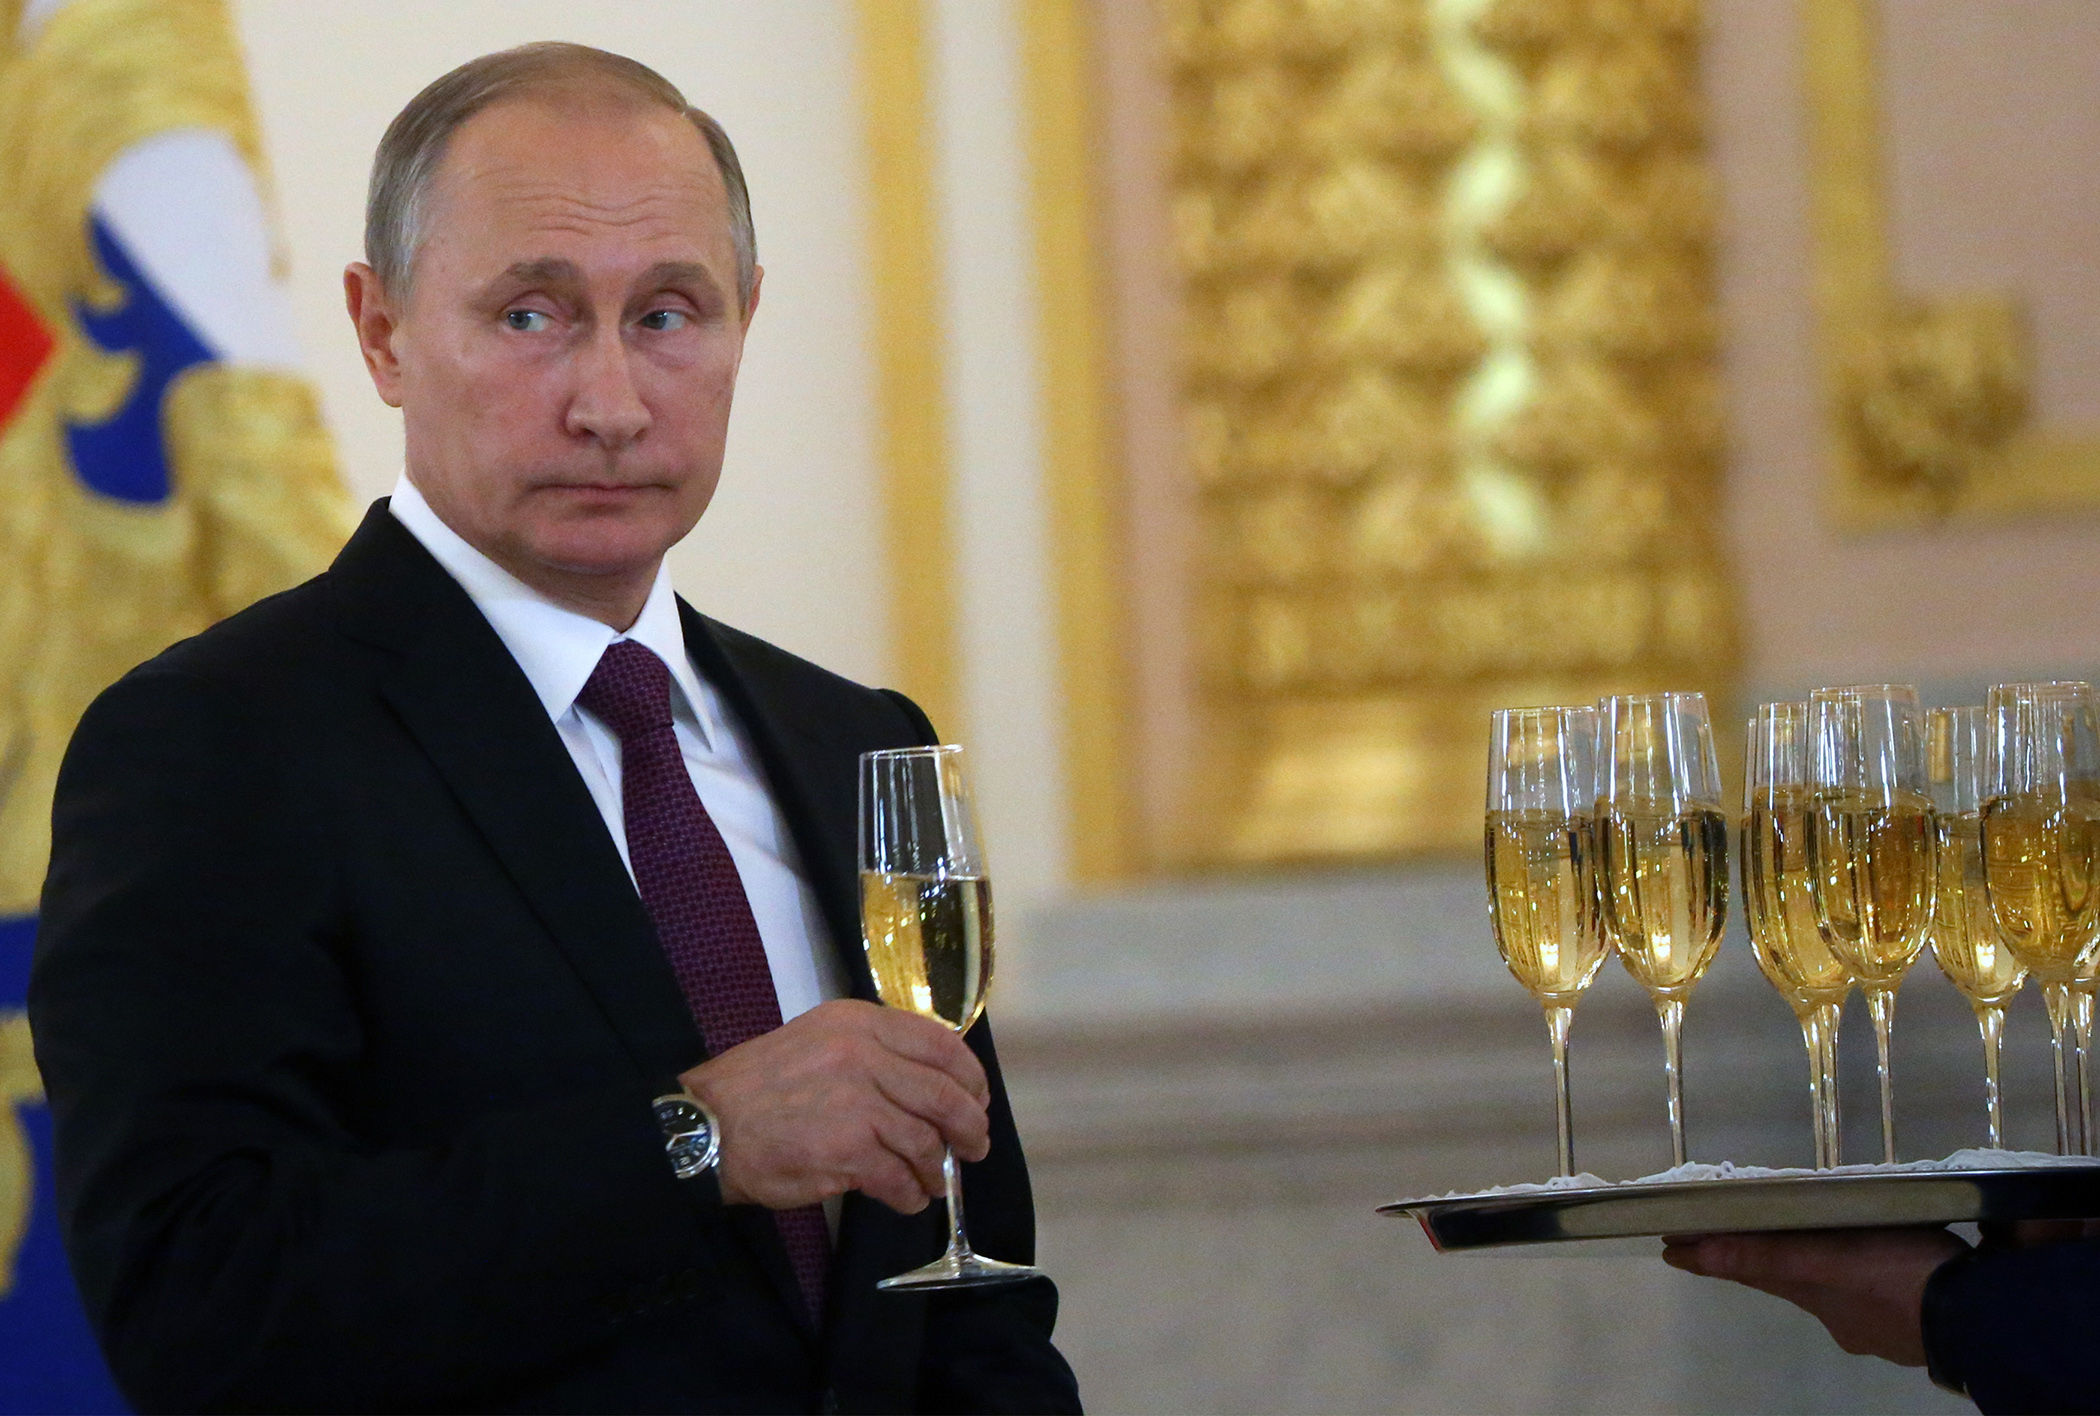 Putin Drinking Champagne